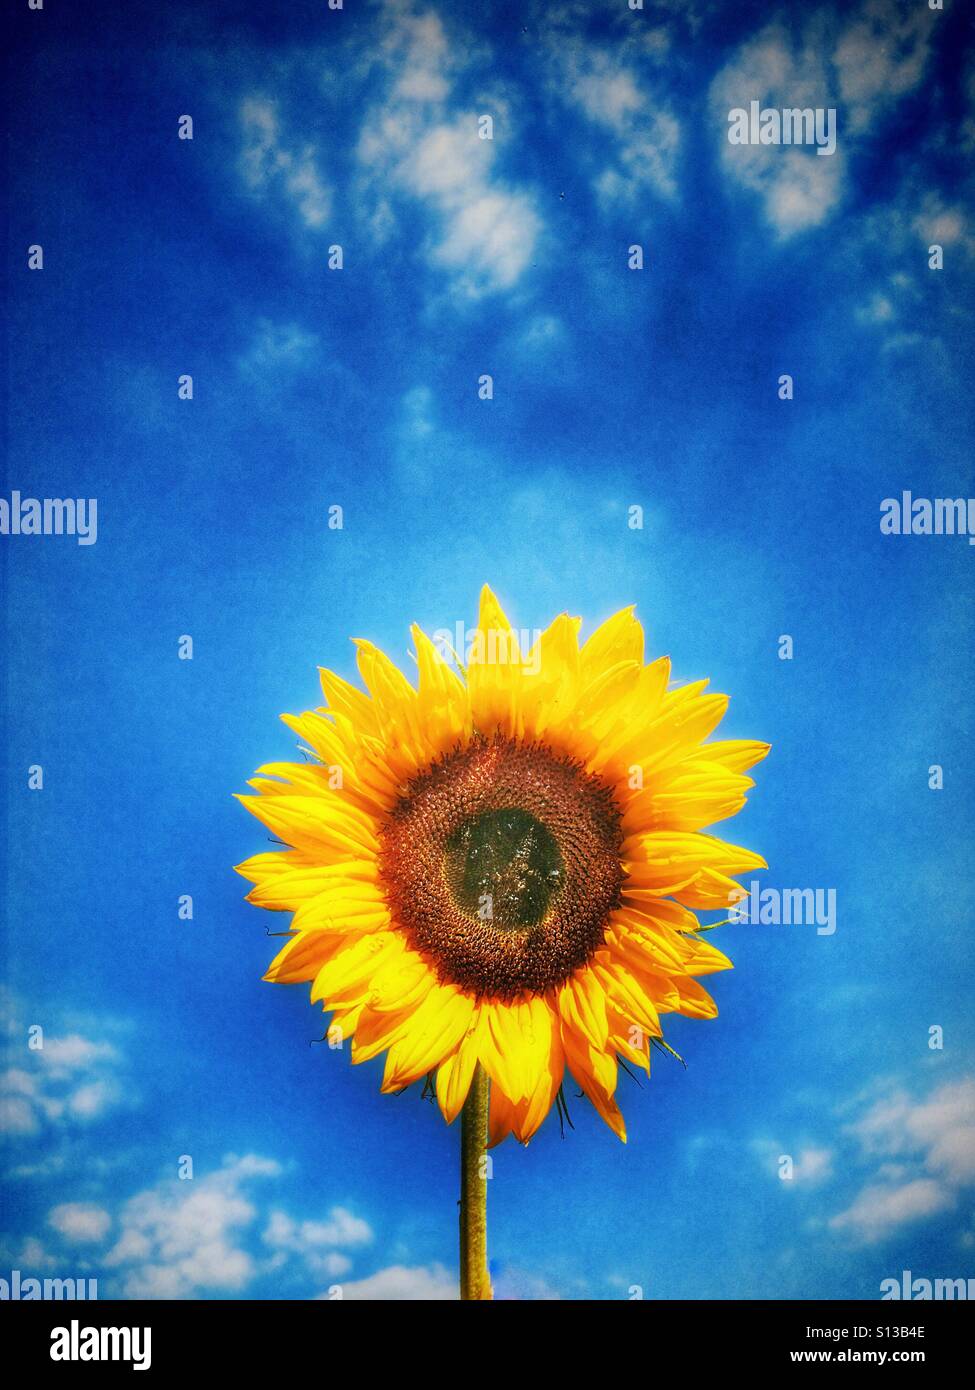 Sunflower against blue sky Banque D'Images